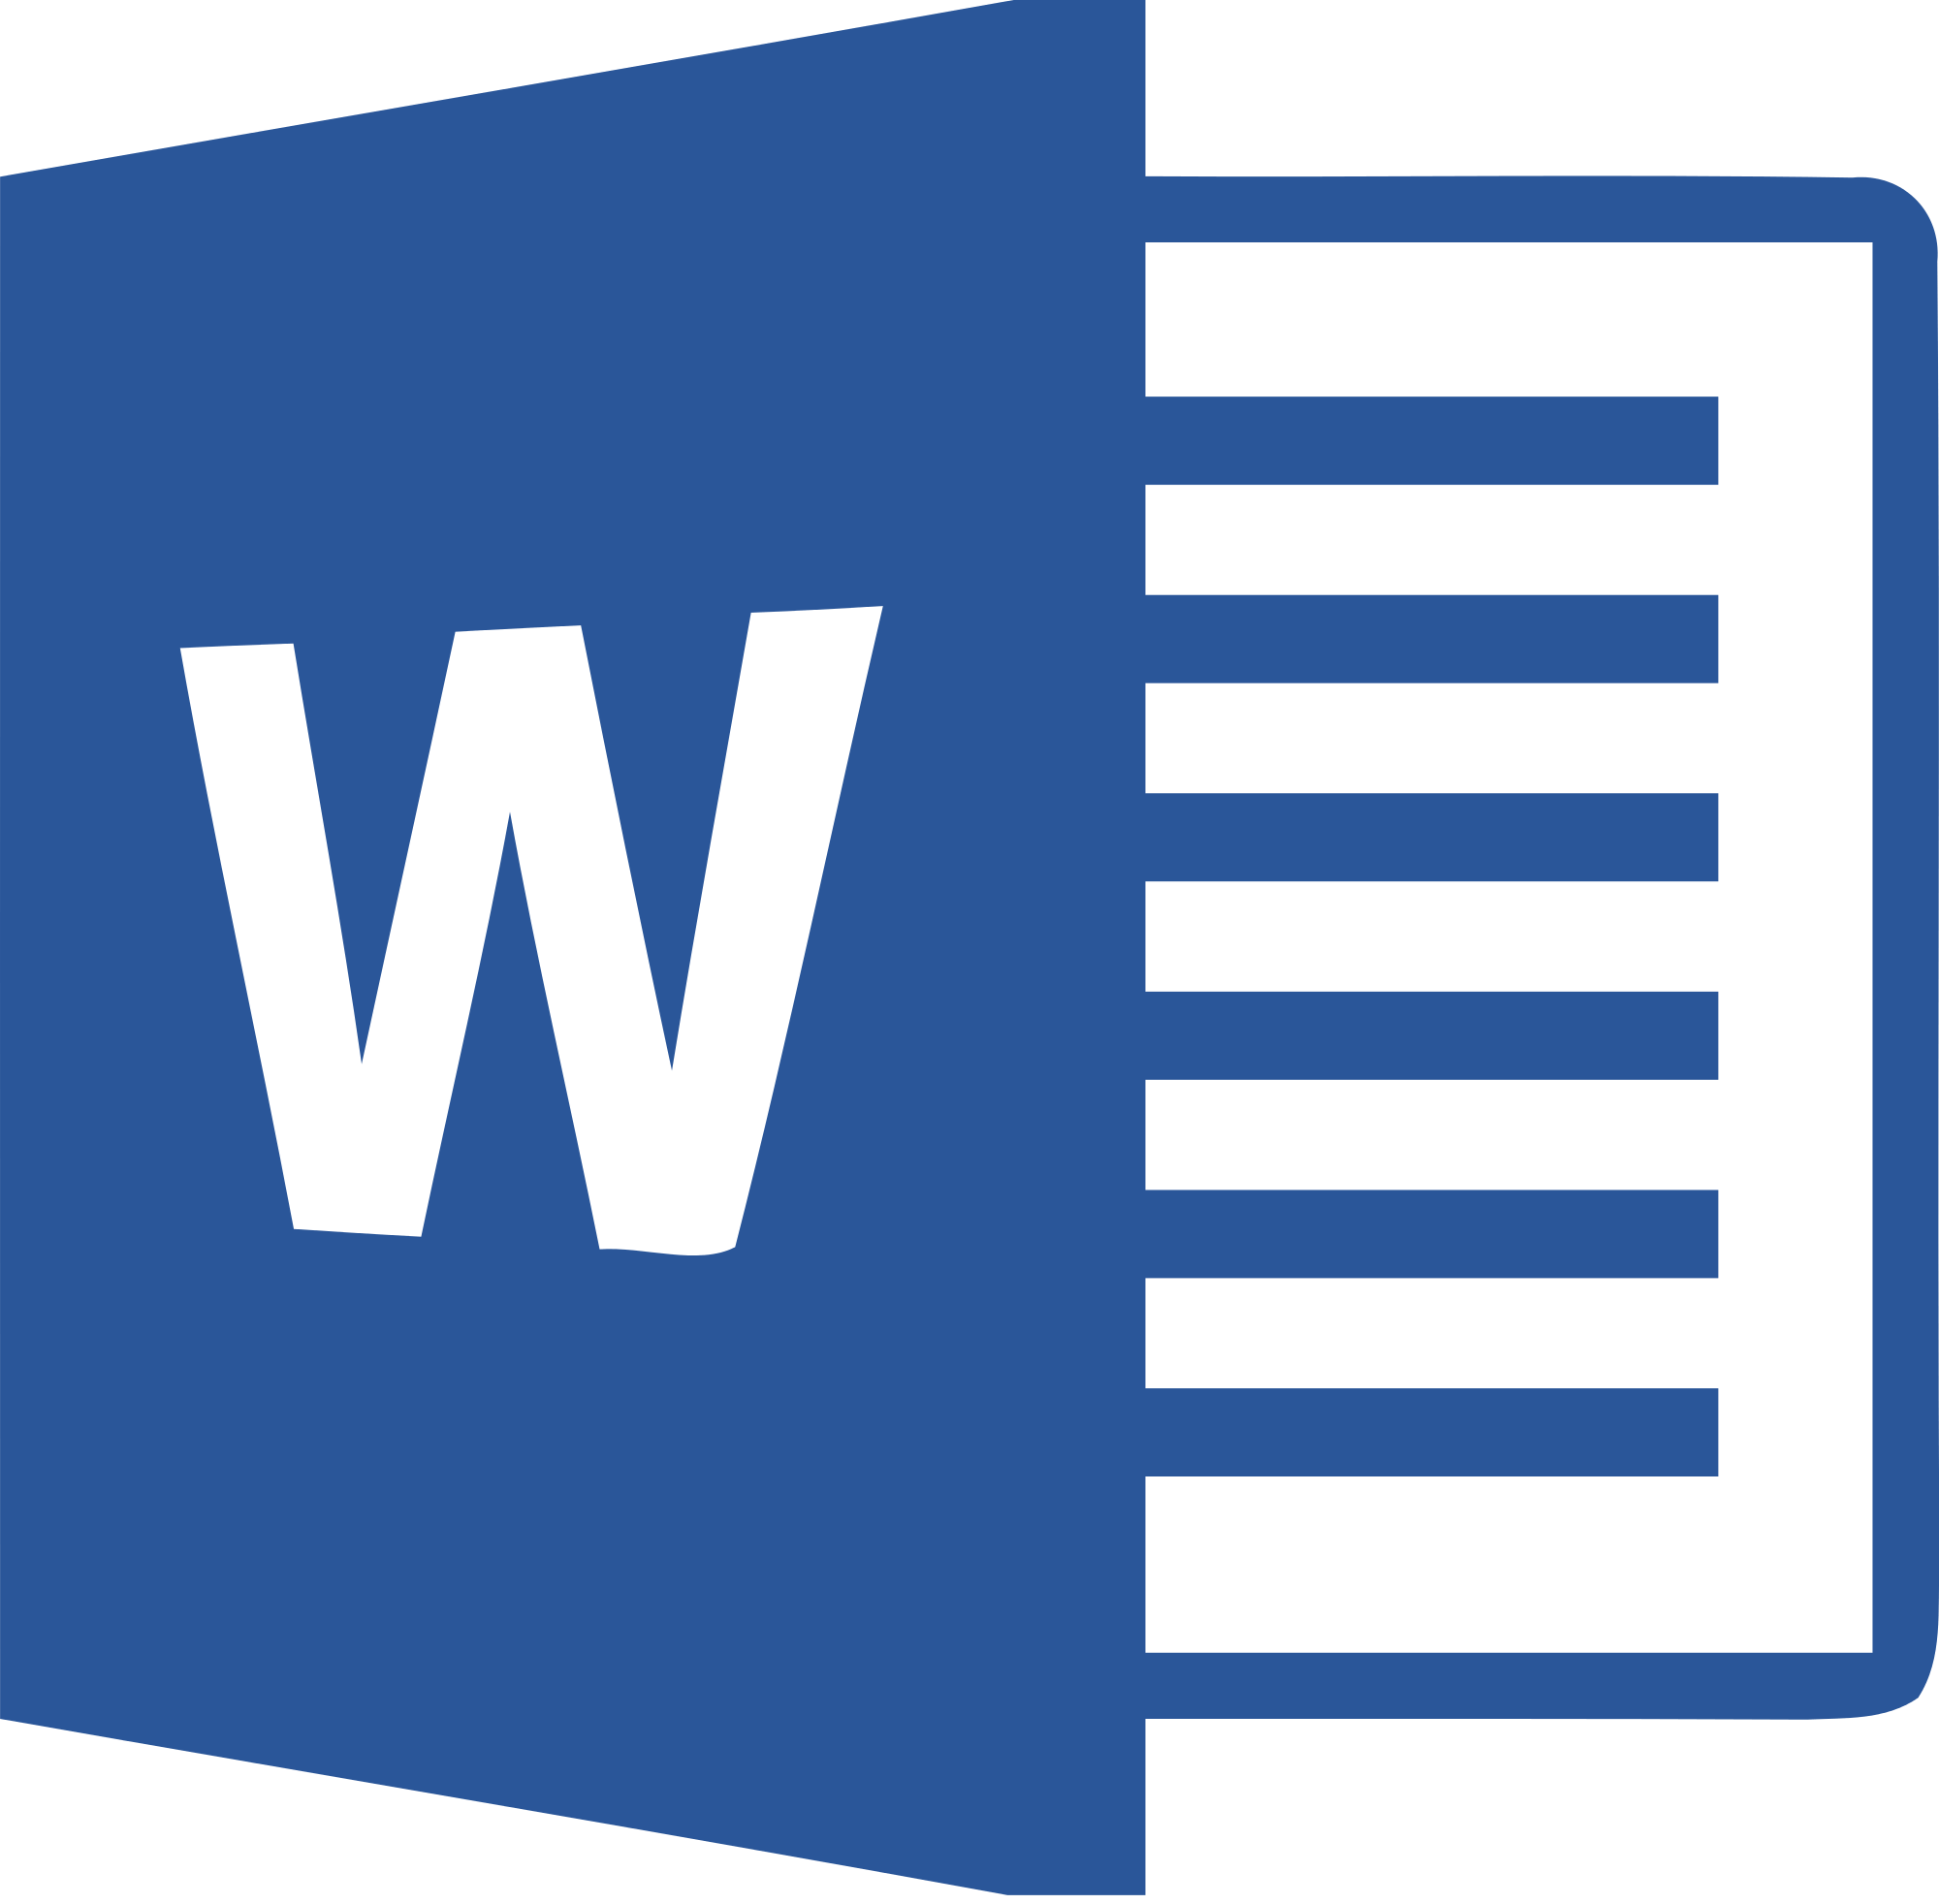 Microsoft Word Logo - File:Microsoft Word 2013 logo.svg - Wikimedia Commons